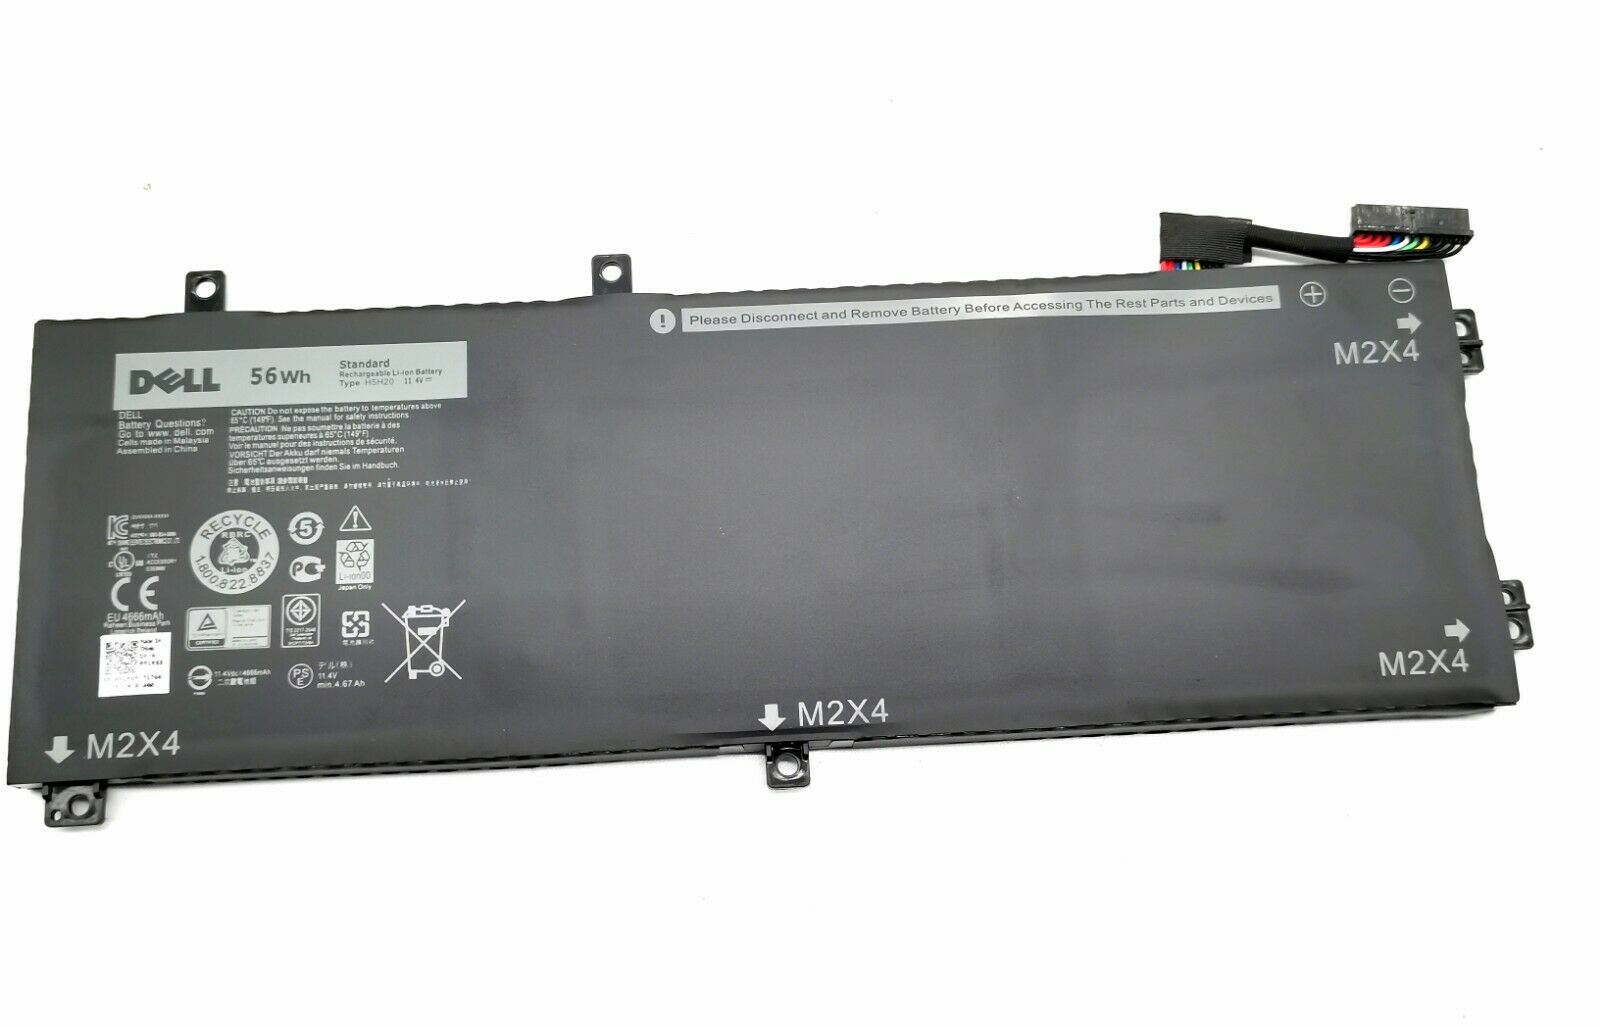  56Wh Original H5H20 Laptop Battery